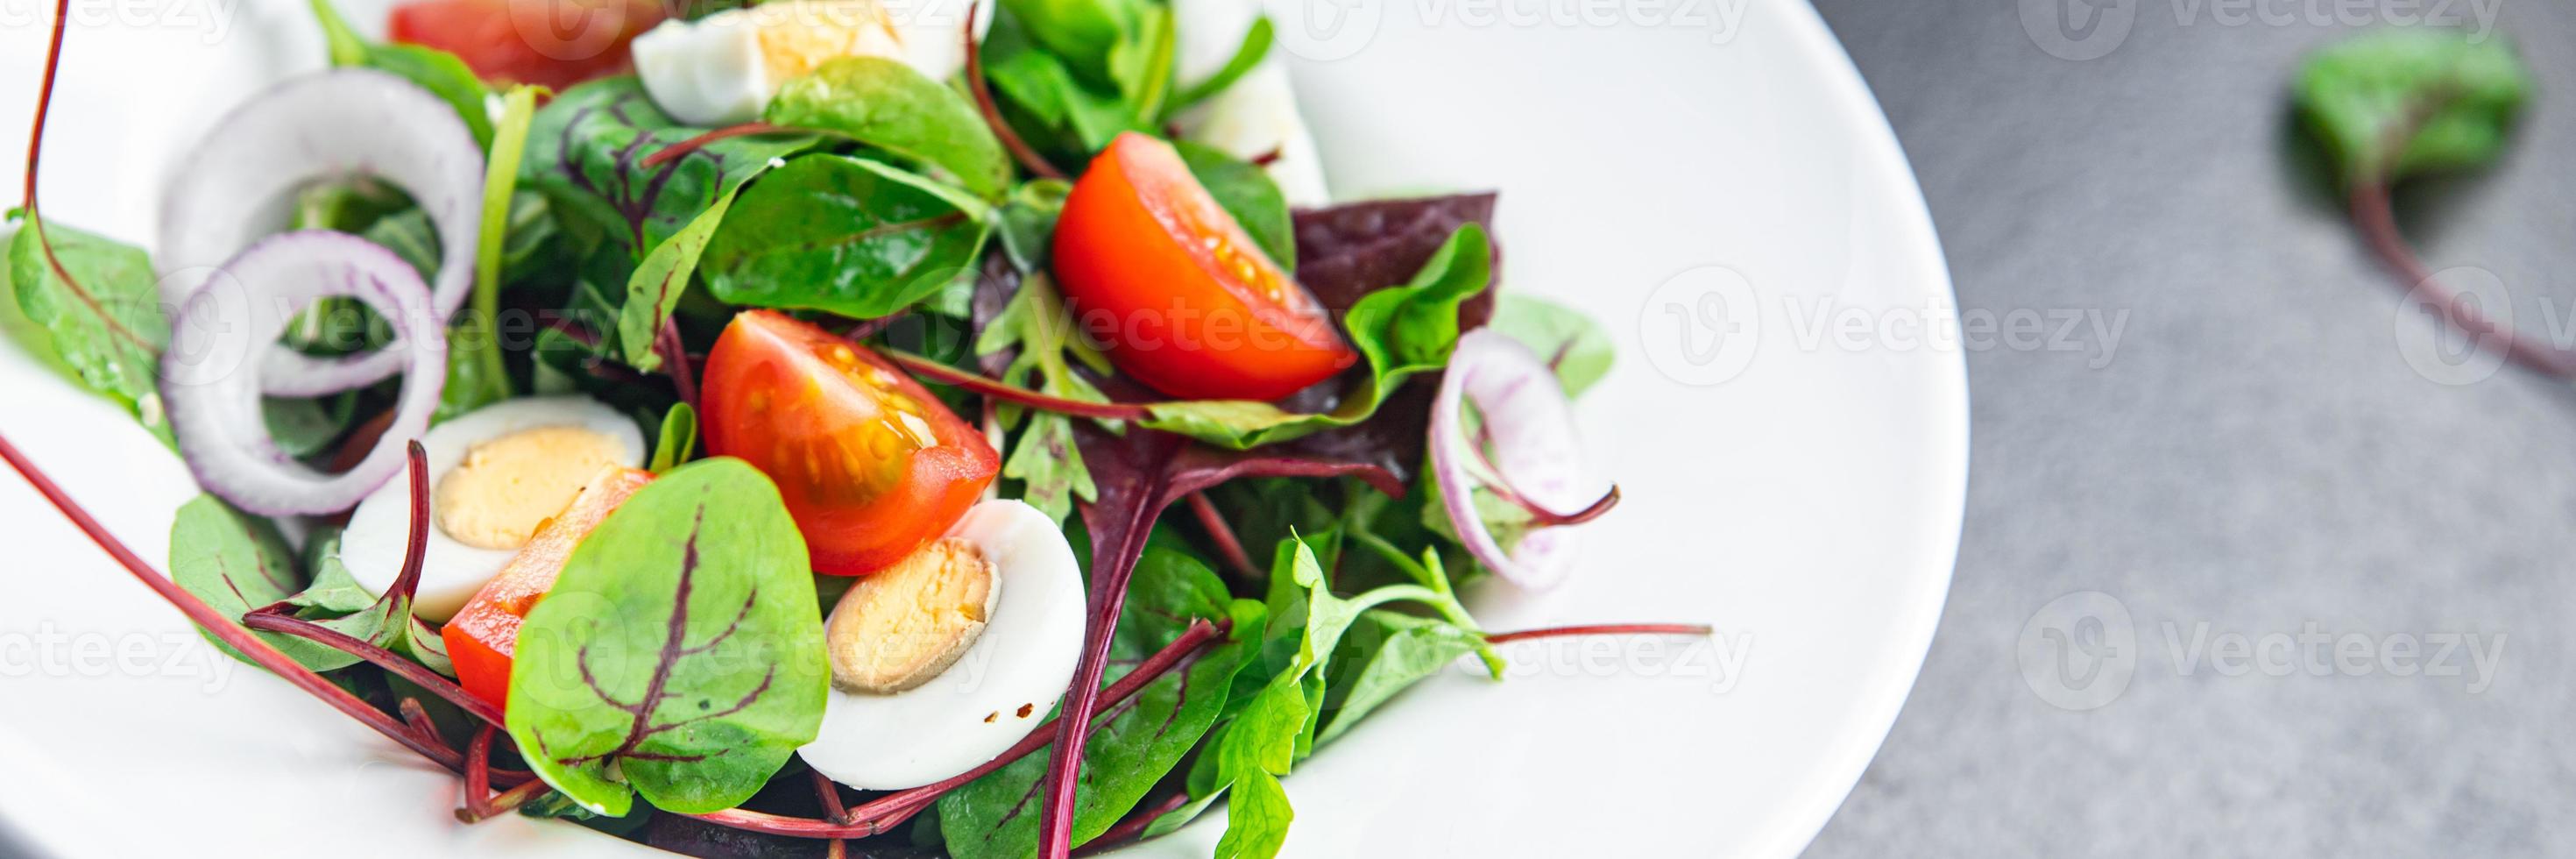 ensalada huevo de codorniz tomate, mezcla de lechugas hojas comida saludable ceto o dieta paleo foto